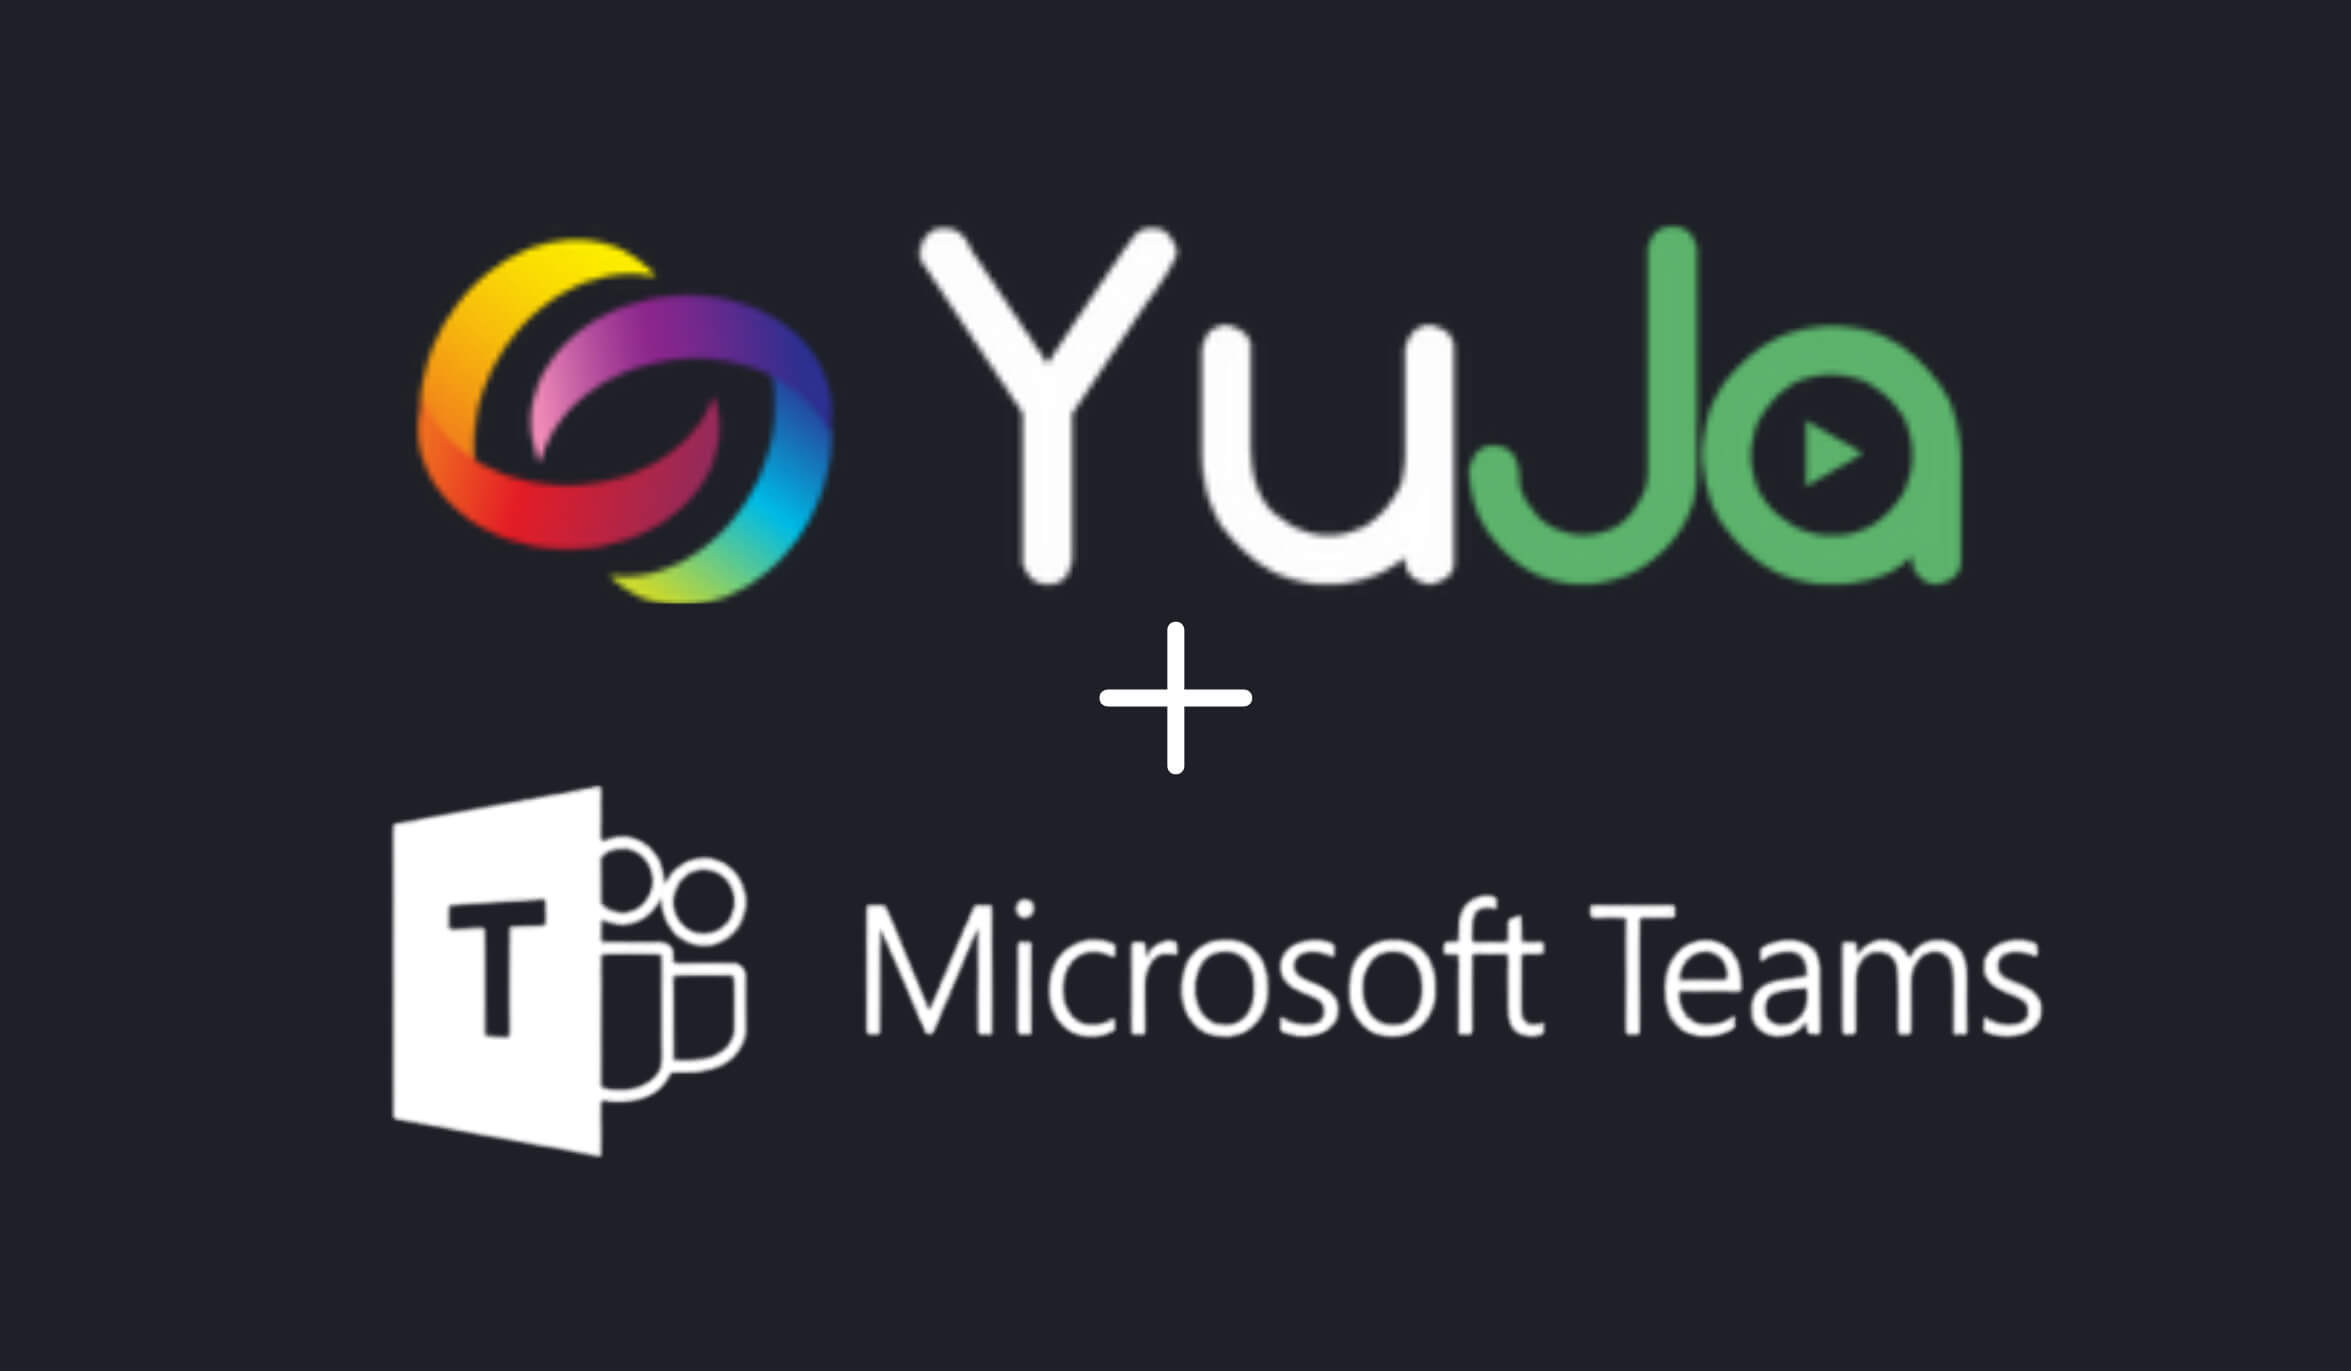 YuJa + Microsoft Teams logos